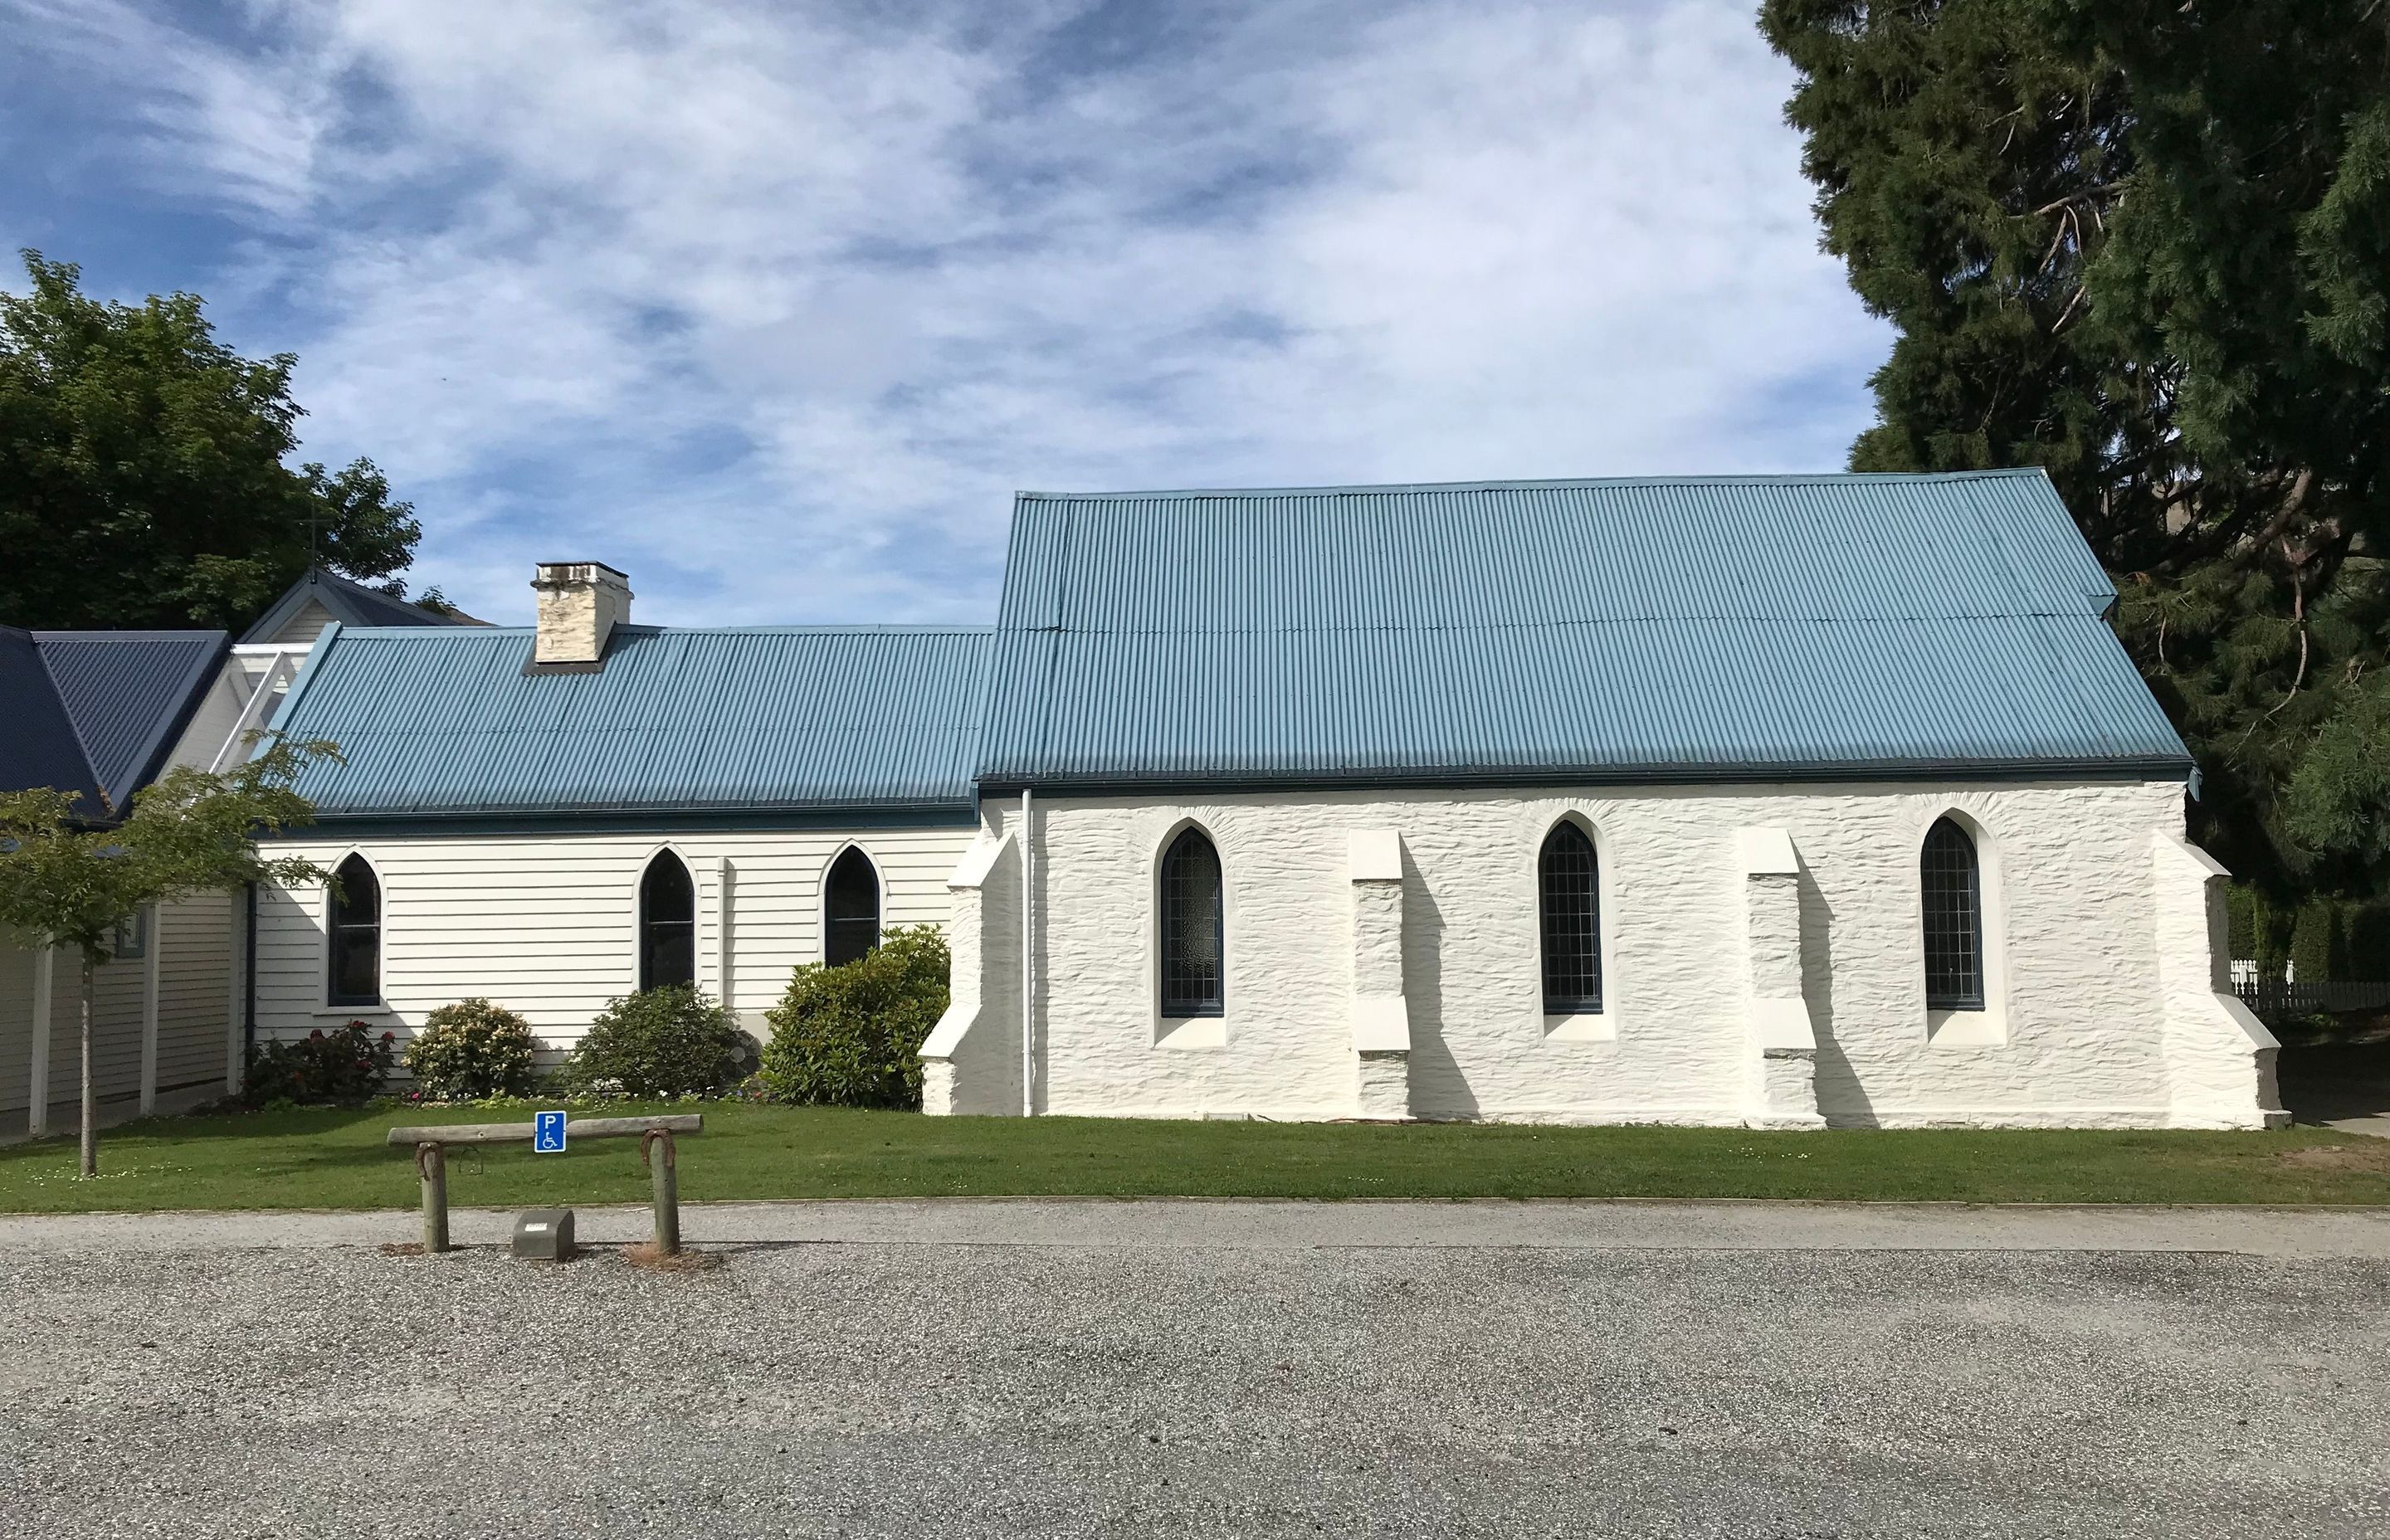 St Johns Church and Community Hall